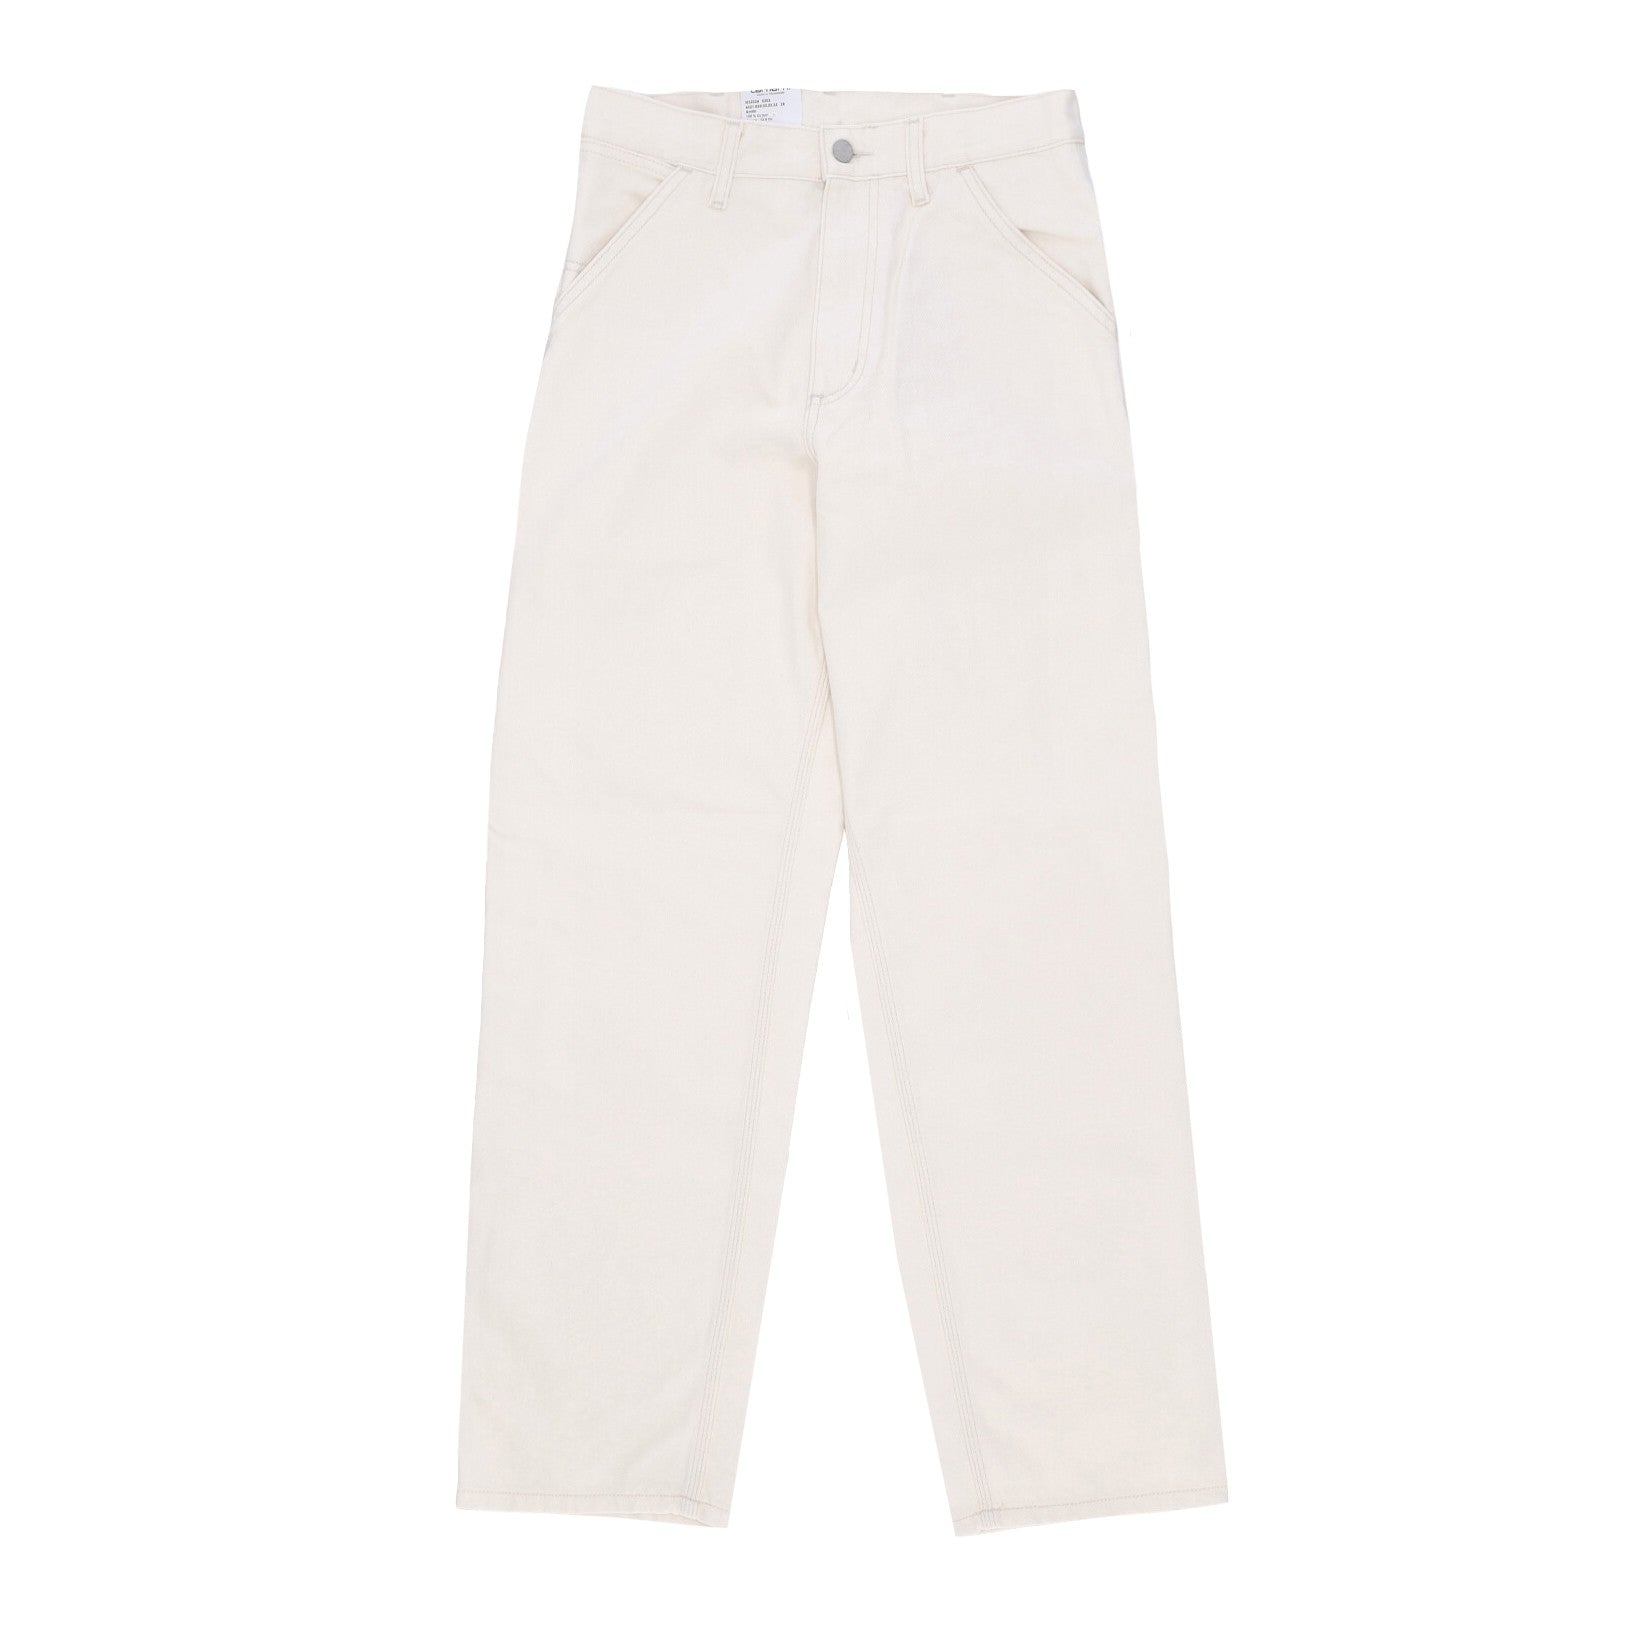 Jeans Uomo Single Knee Pant White Rinsed I032024